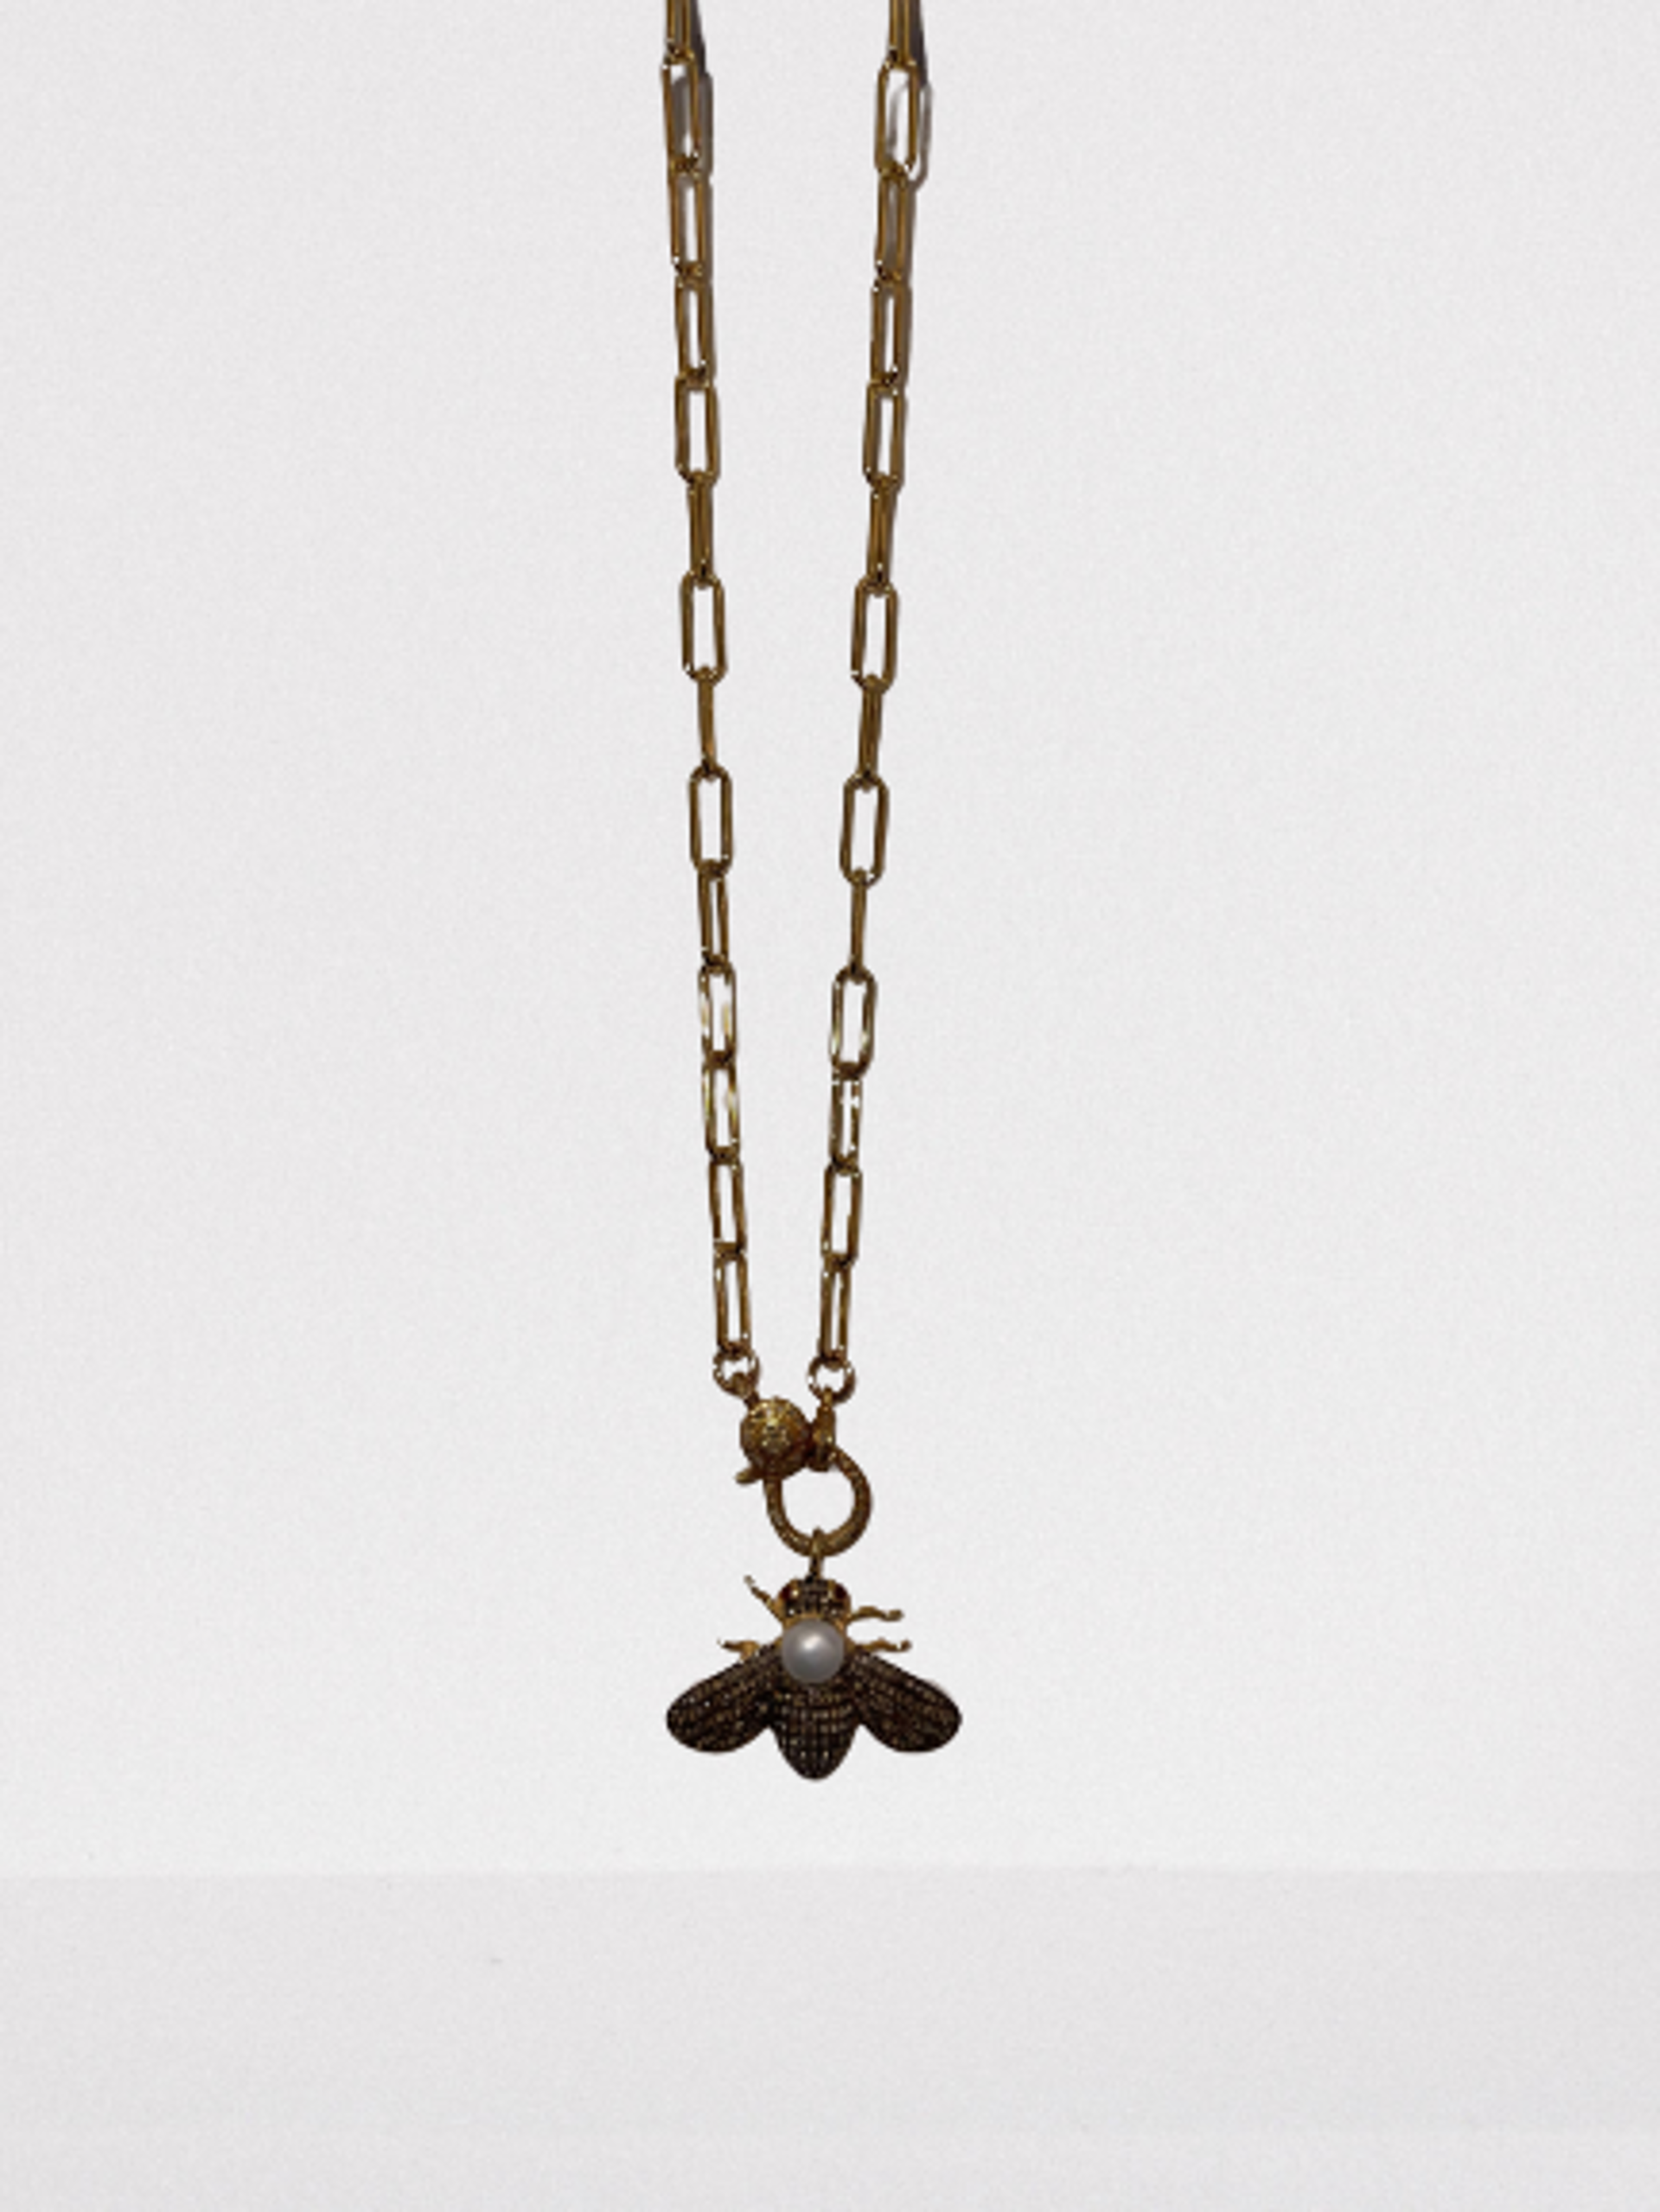 Gold Vermeil Paper Clip Chain Necklace with Diamond Lobster Clasp by Karen Birchmier